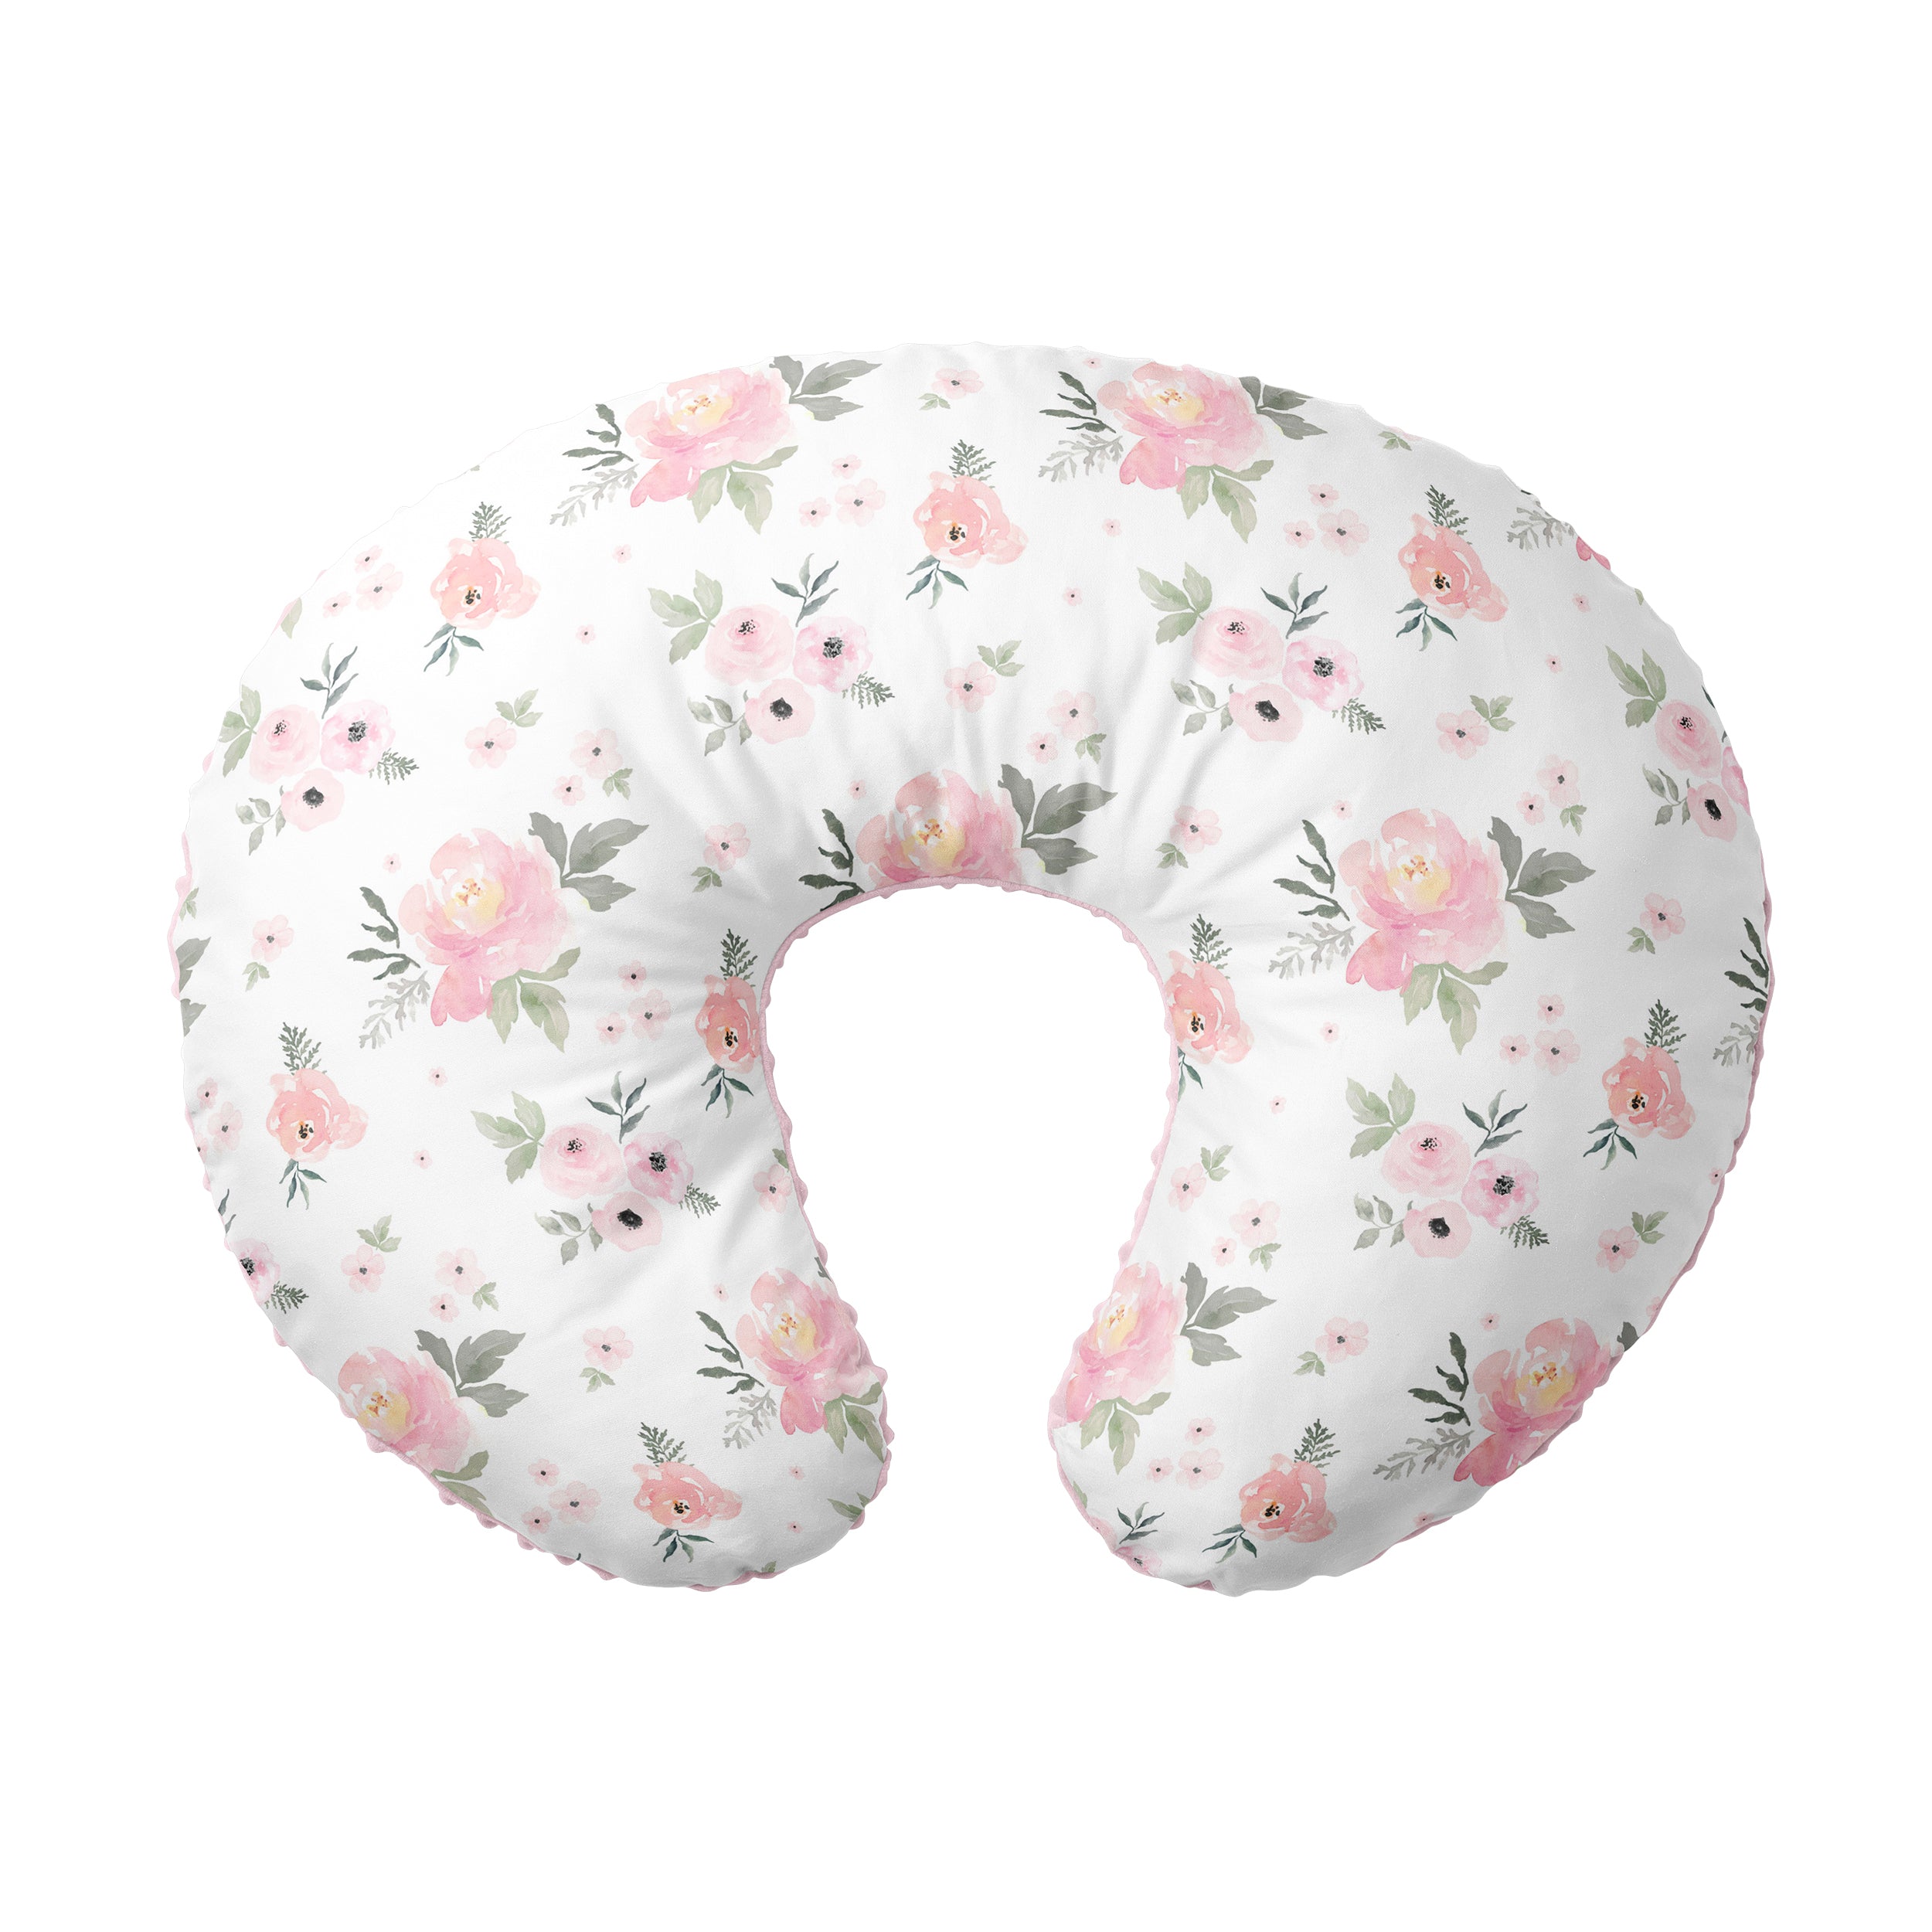 floral nursing pillow